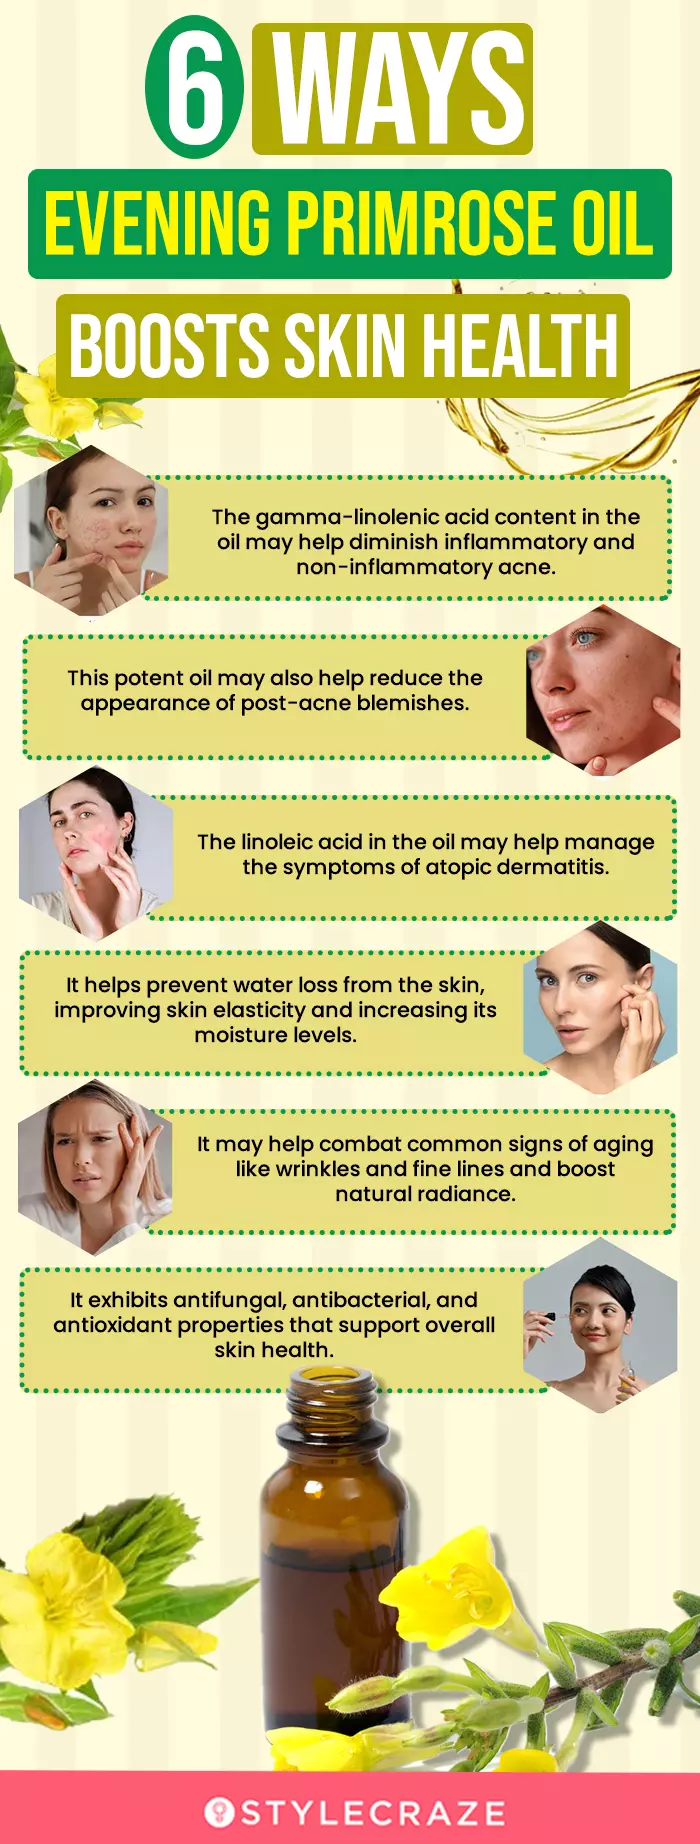  evening primrose oil top skin benefits (infographic)